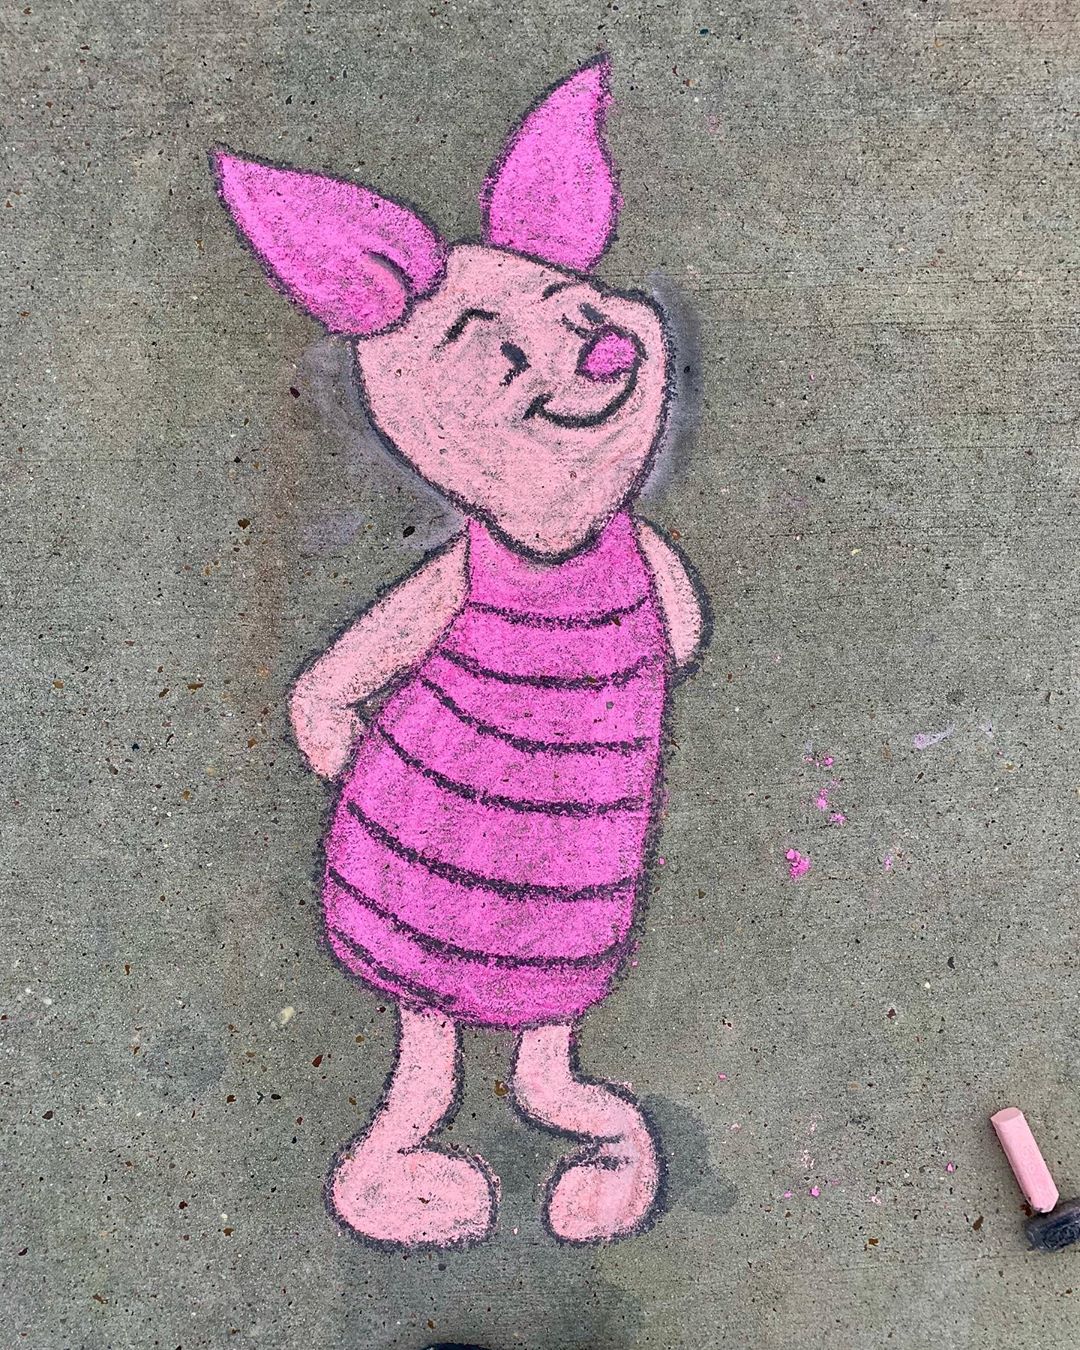 Updated 50 Disney Chalk Art Projects July 2020